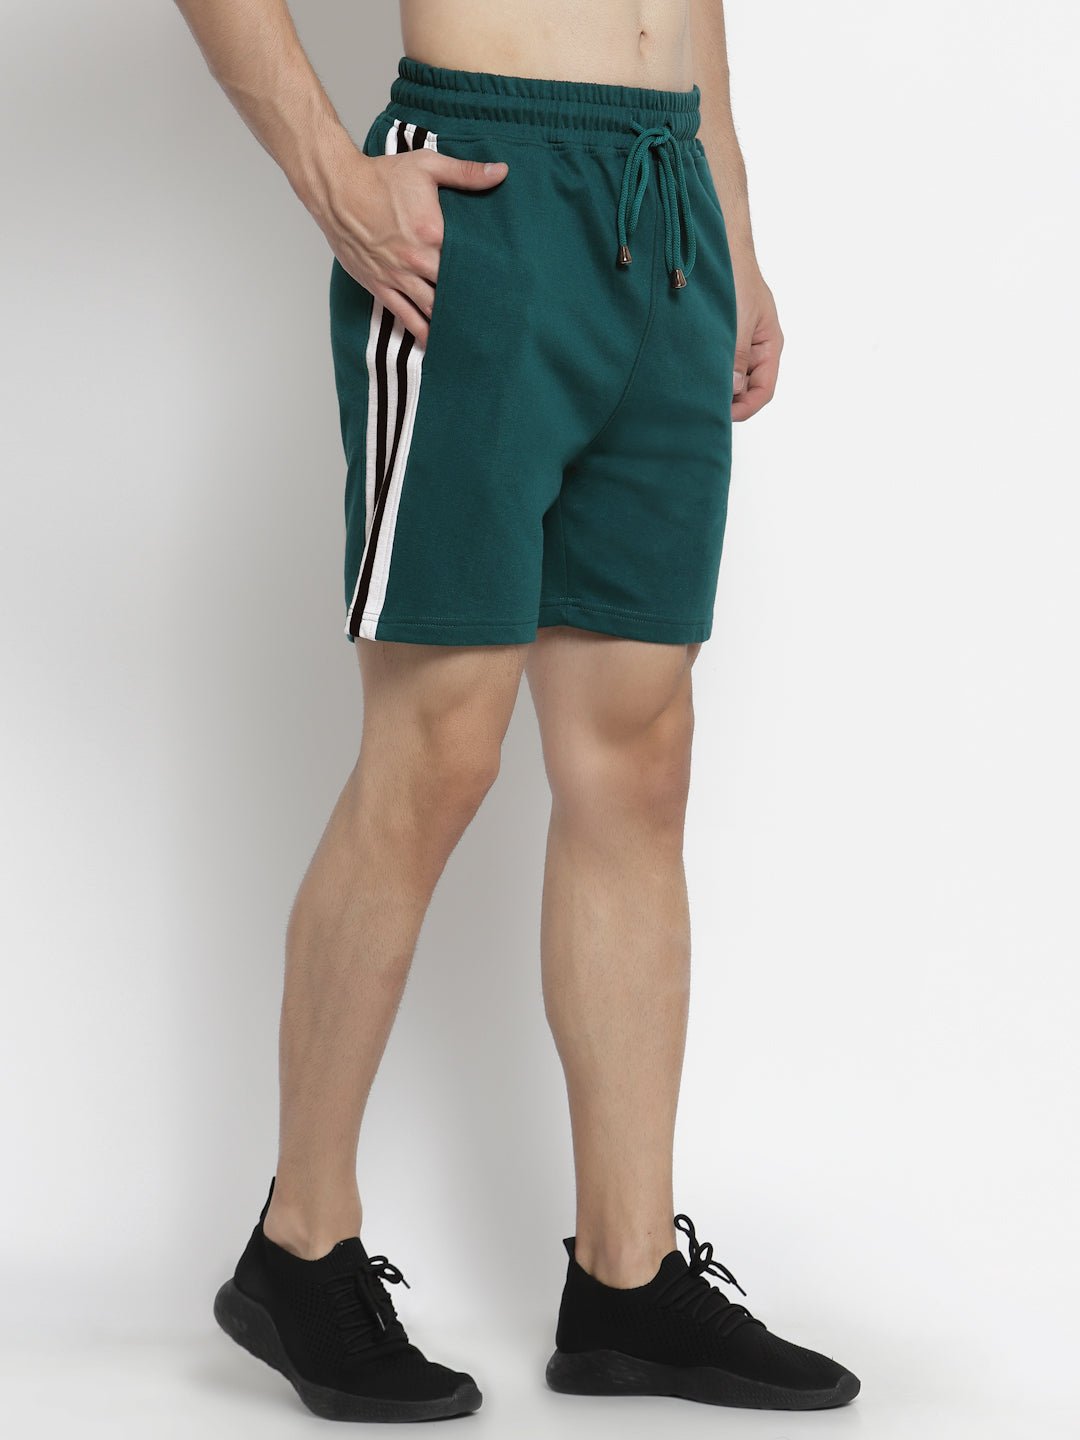 Teal Shorts - clubyork